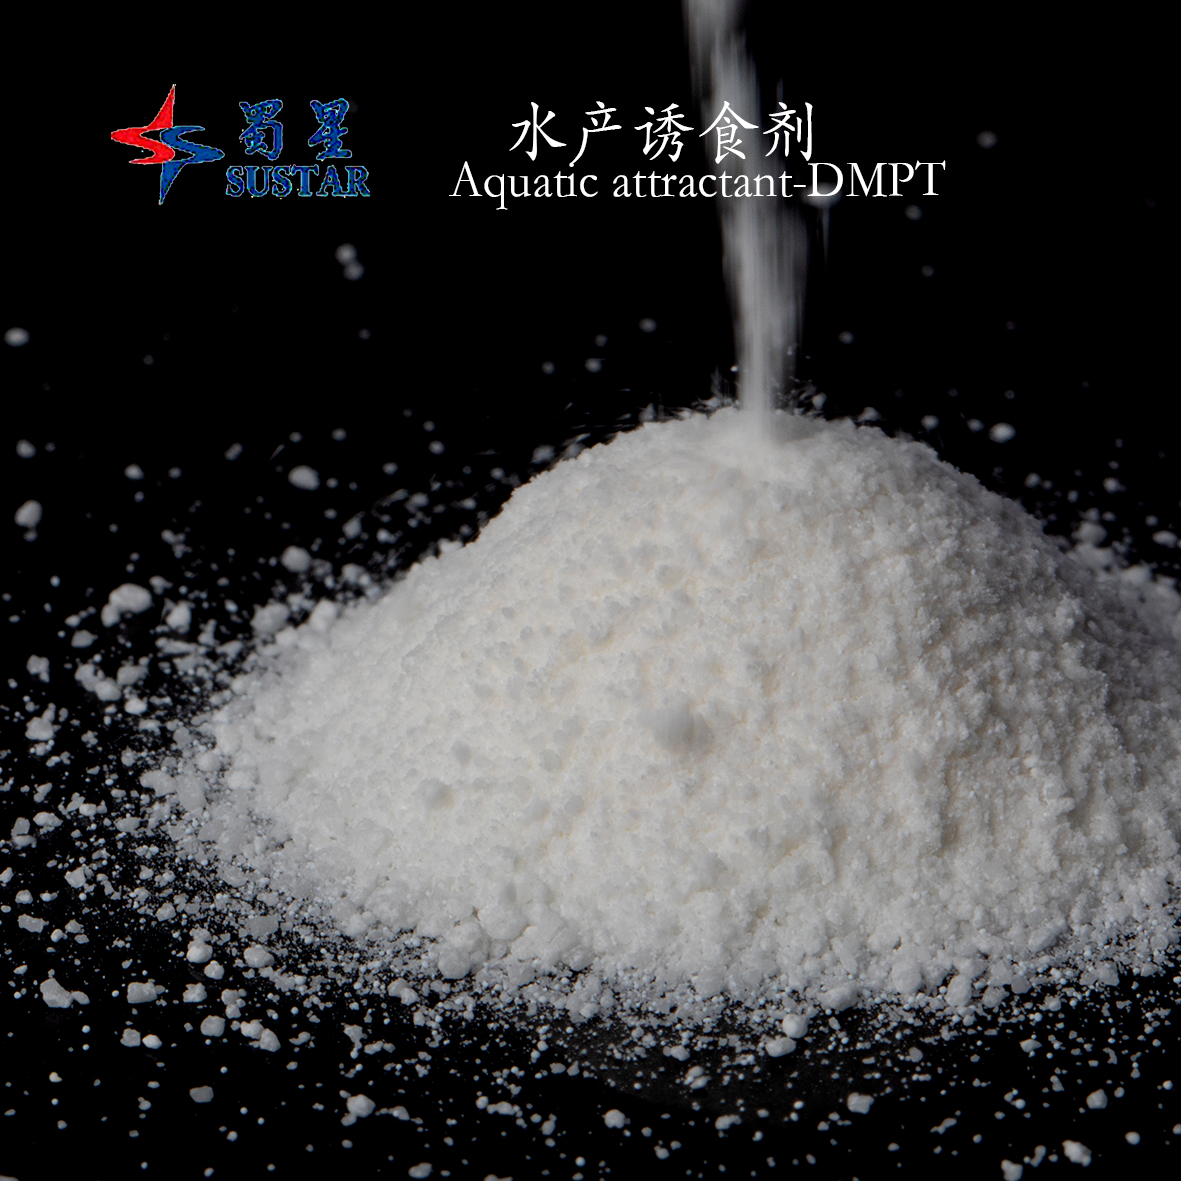 DMPT Dimetil-Beta-Propiotetina Aquapro Polvo cristalino blanco atrayente acuático